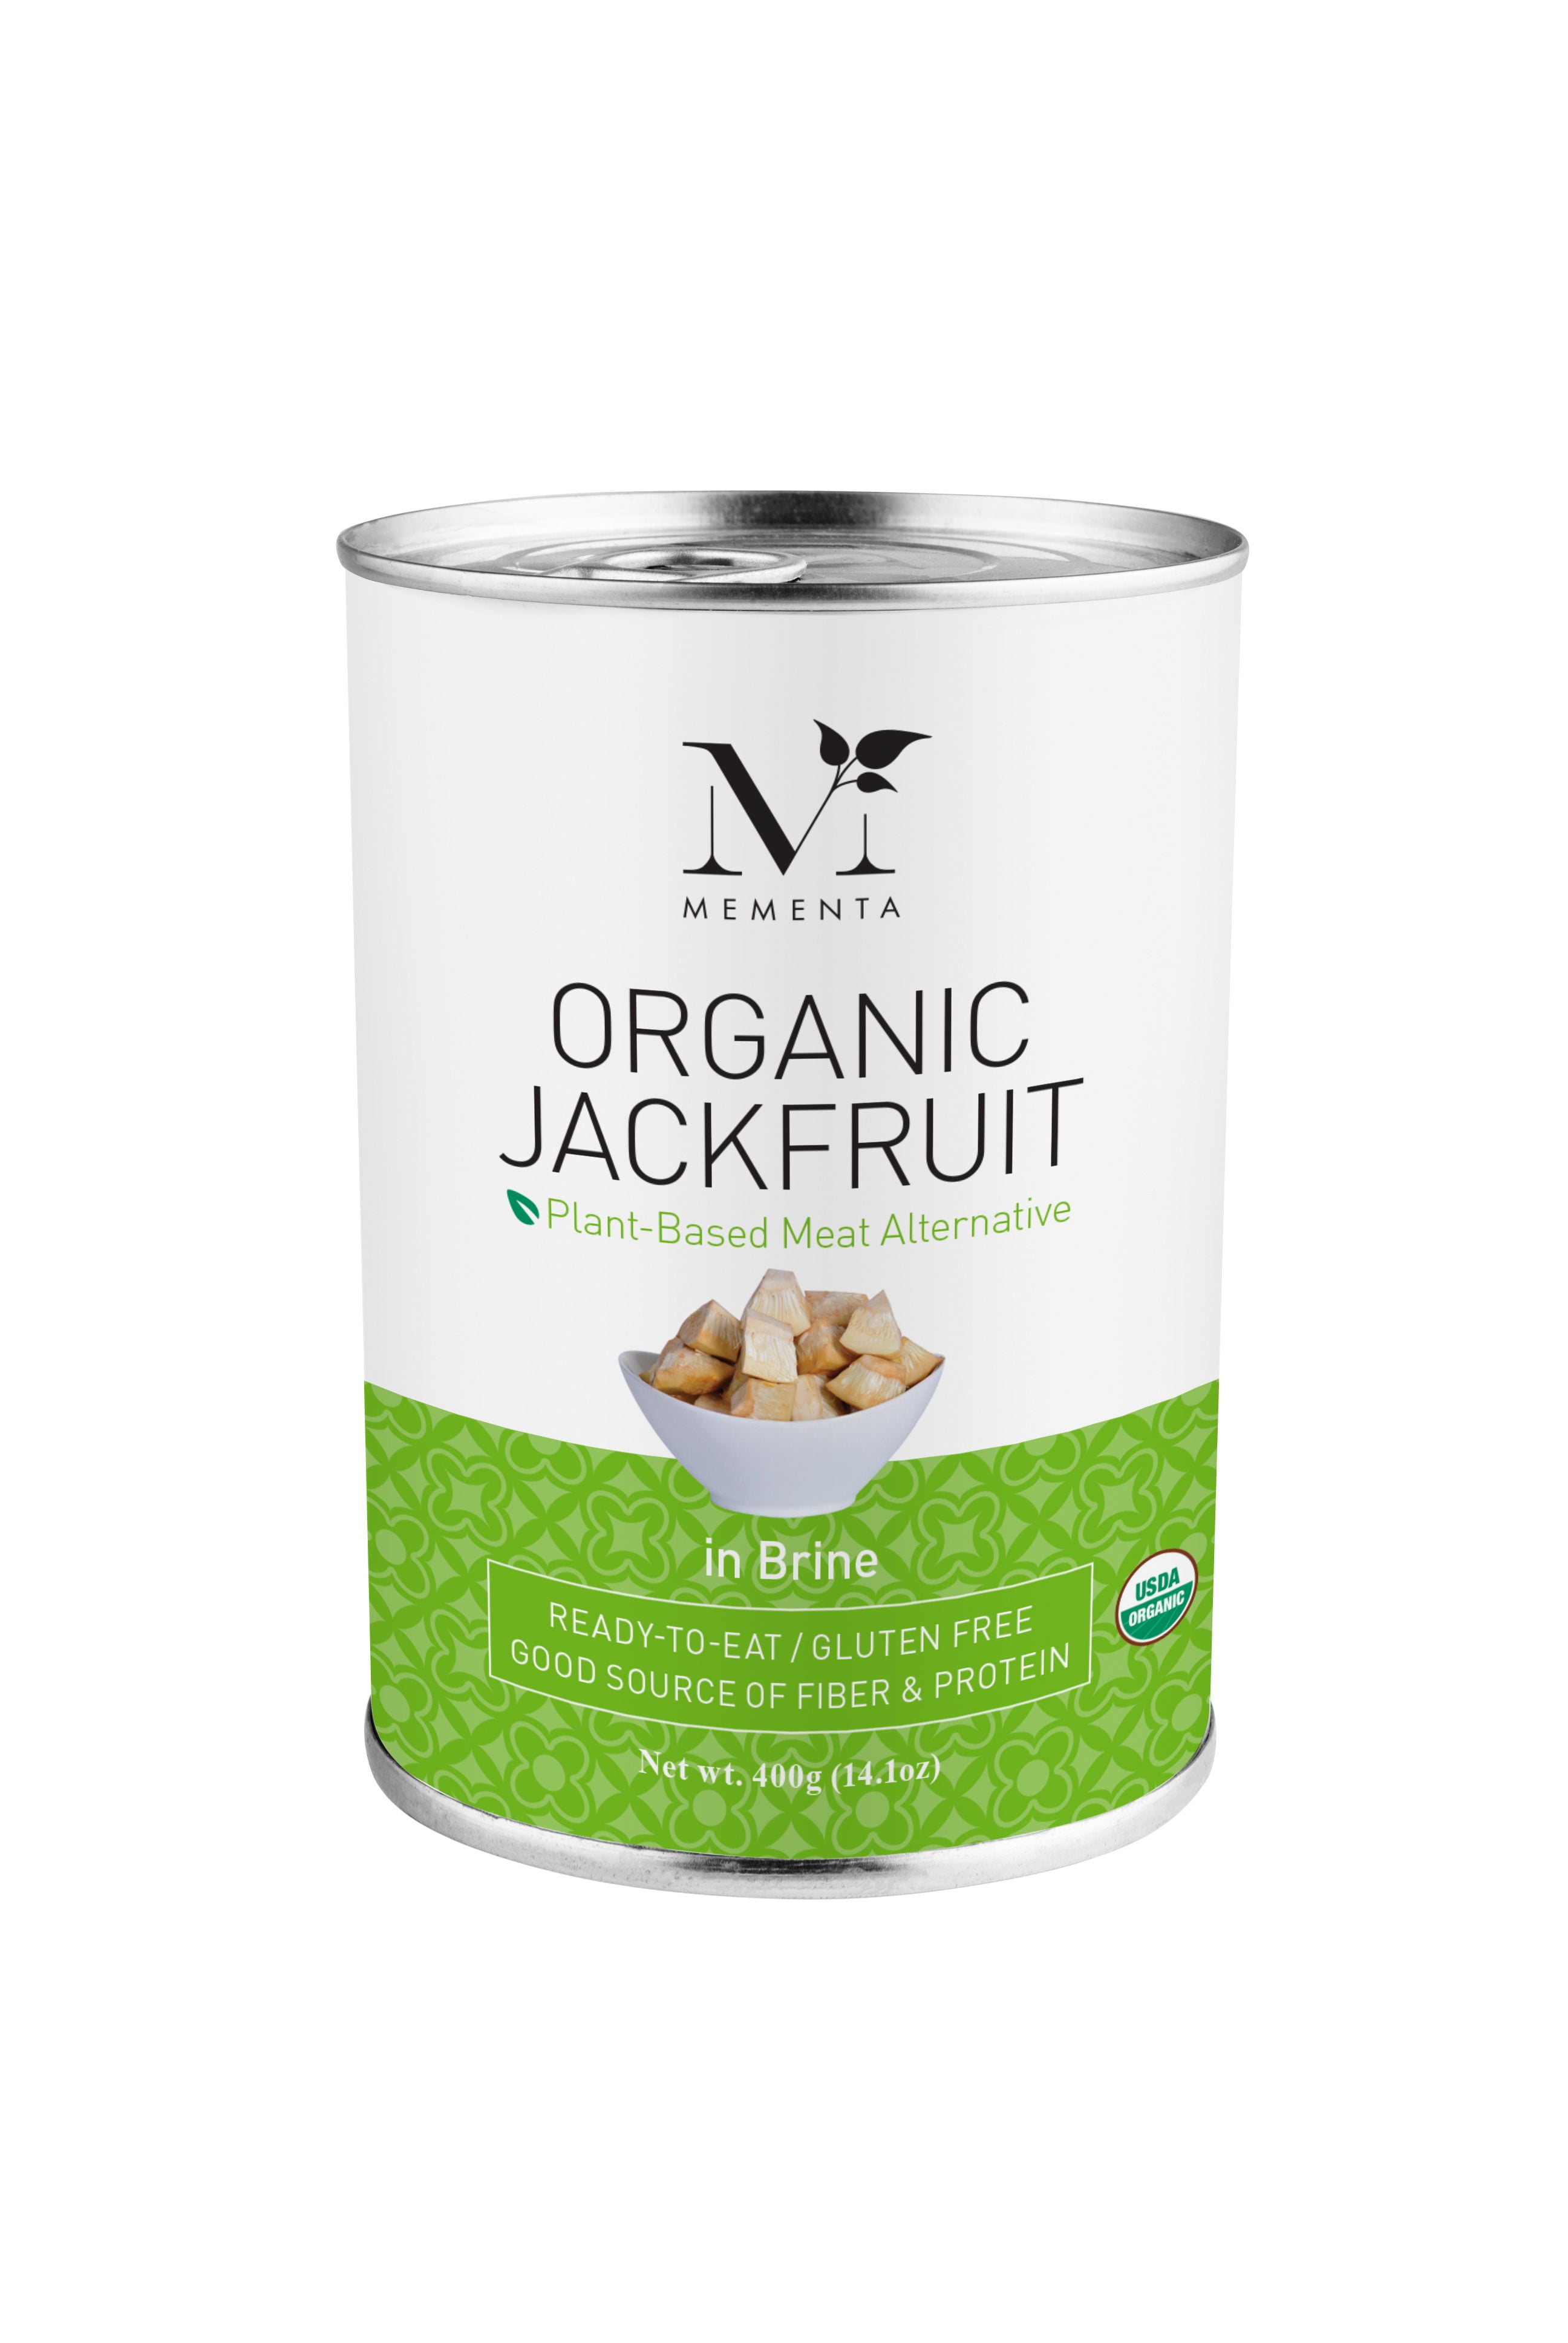 6 pack) Organic Jackfruit in Brine, 14 oz can - Walmart.com